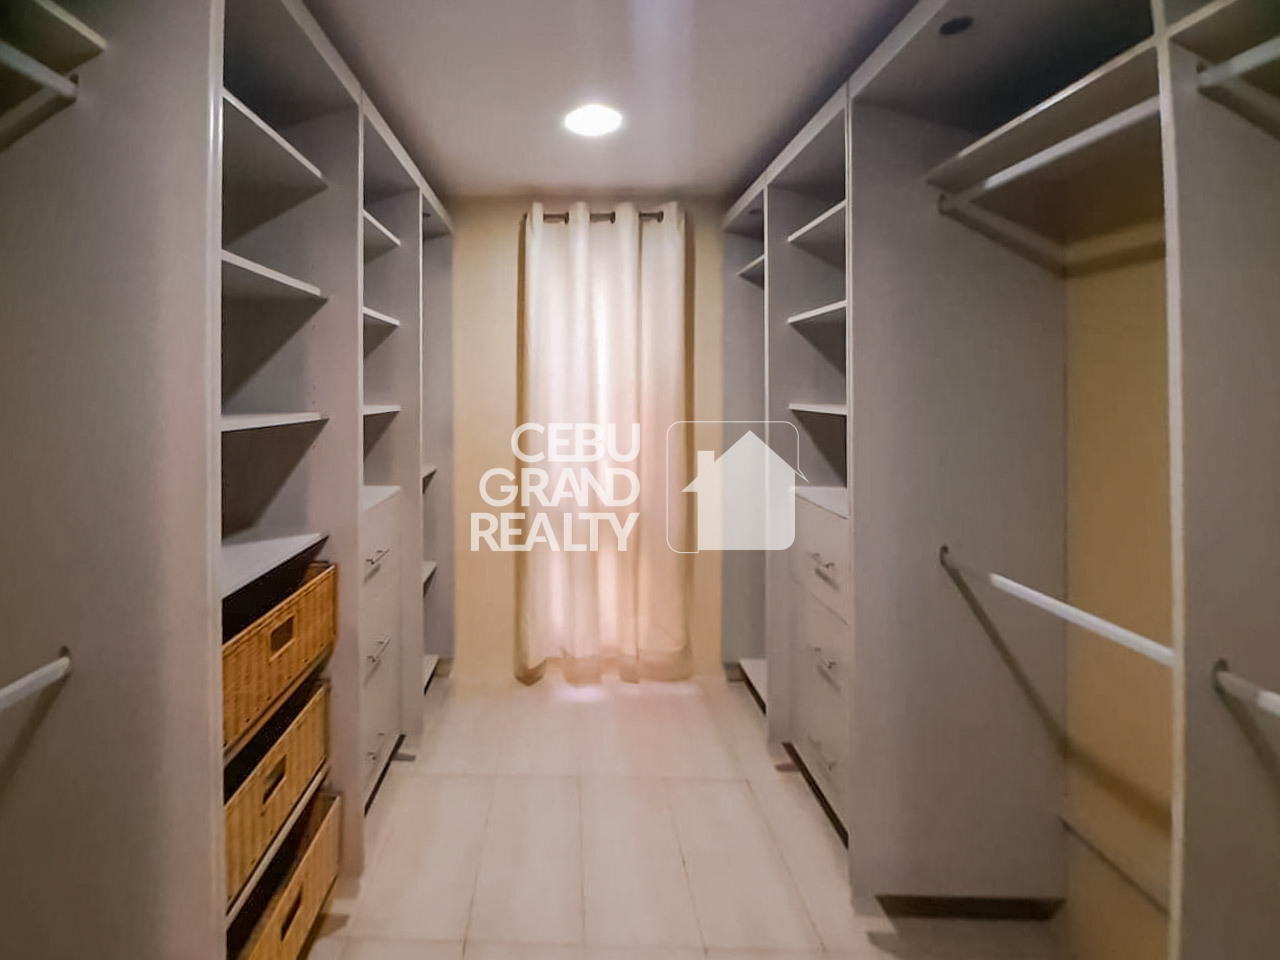 SRBAM3 6 Bedroom House for Sale in Amara Liloan - Cebu Grand Realty (14)